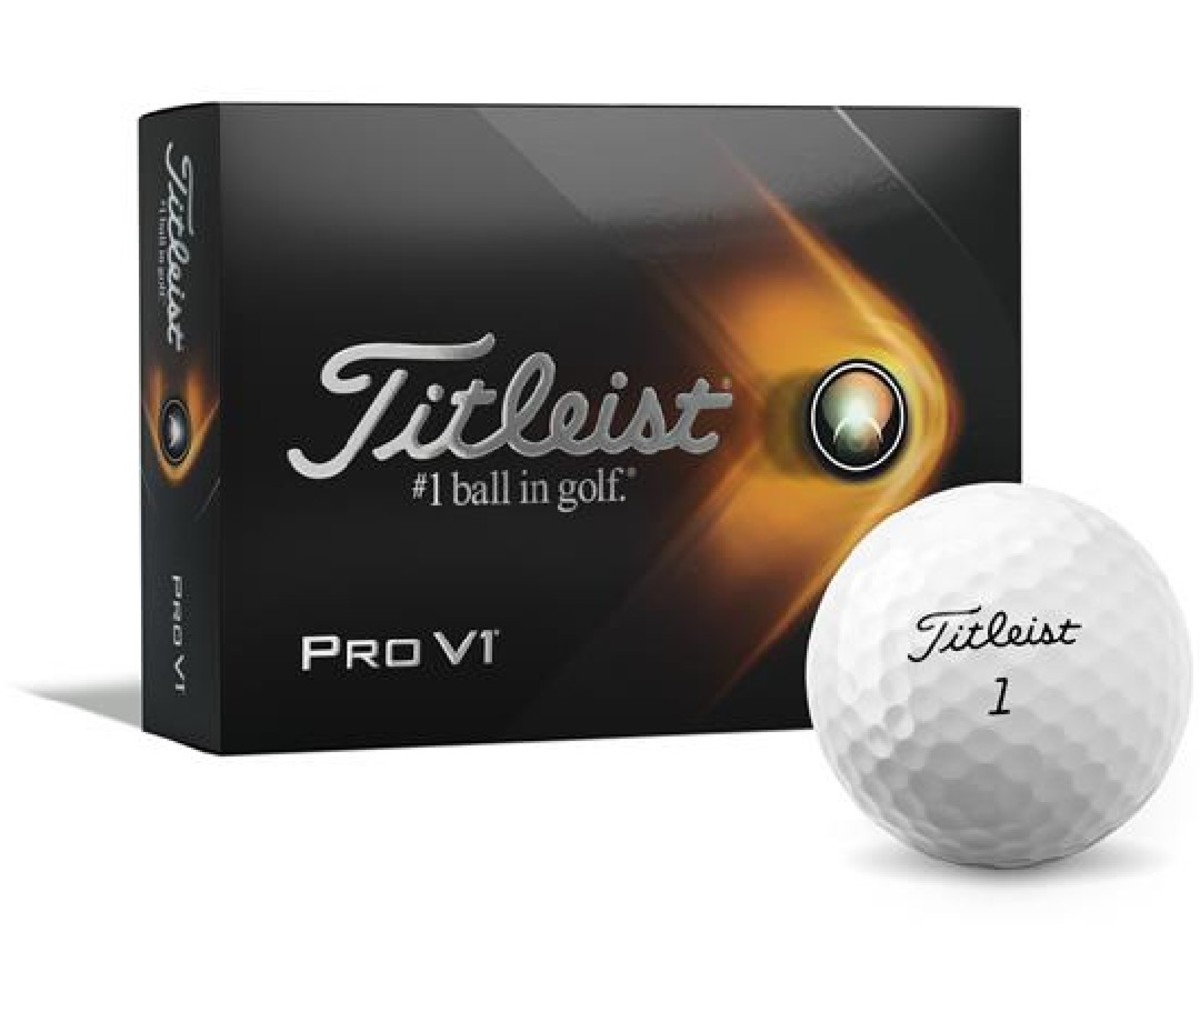 Golfballs.com Personalized Balls